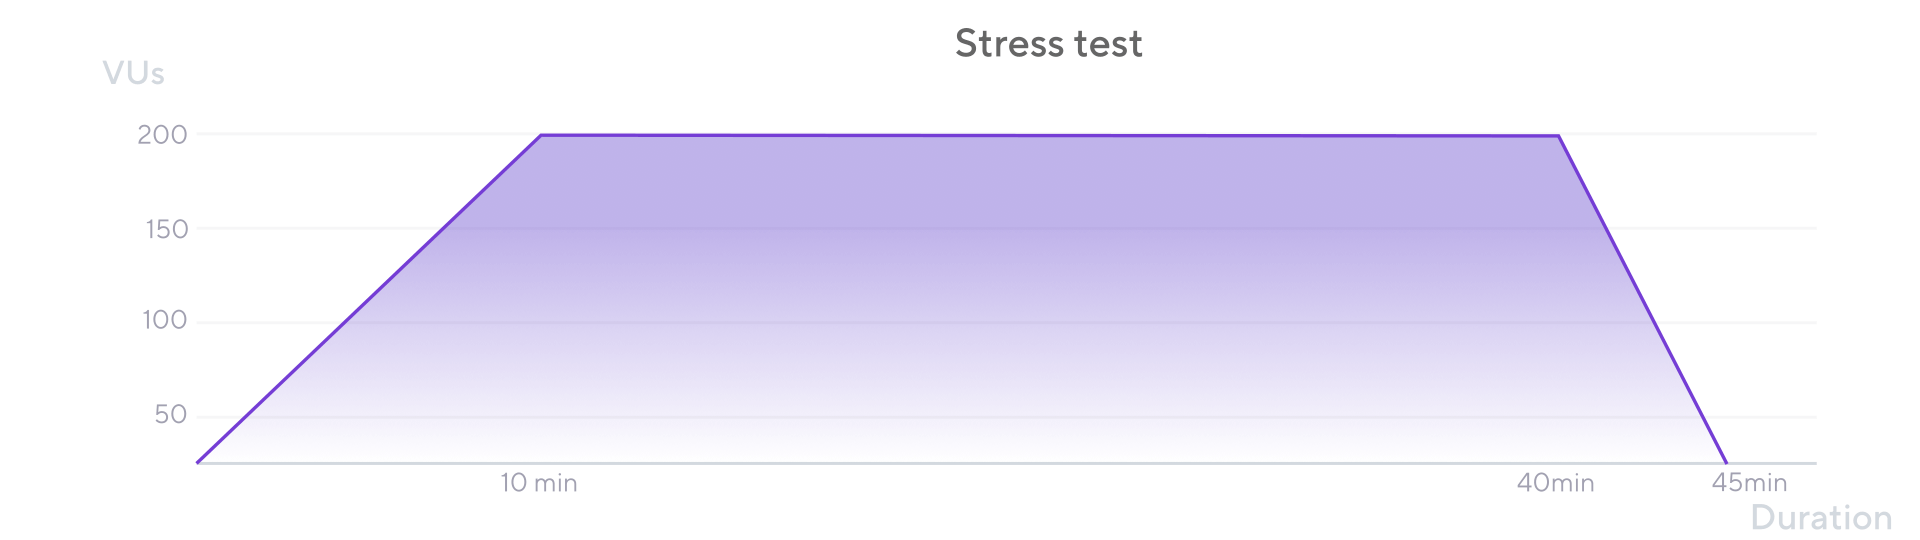 Stress test chart in Grafana k6.